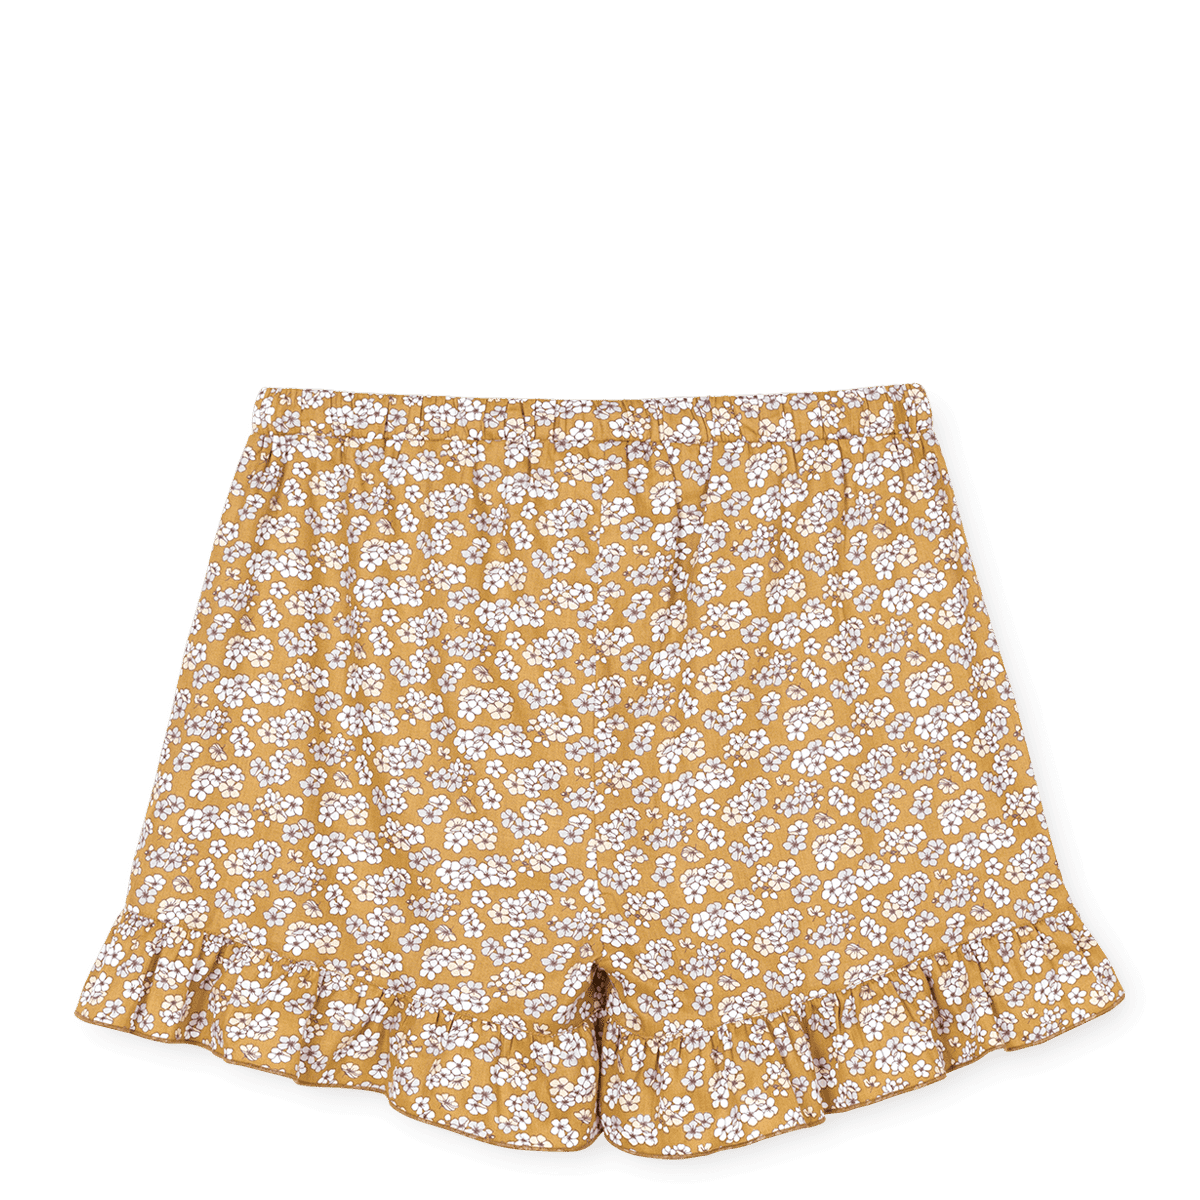 Sola shorts M/L